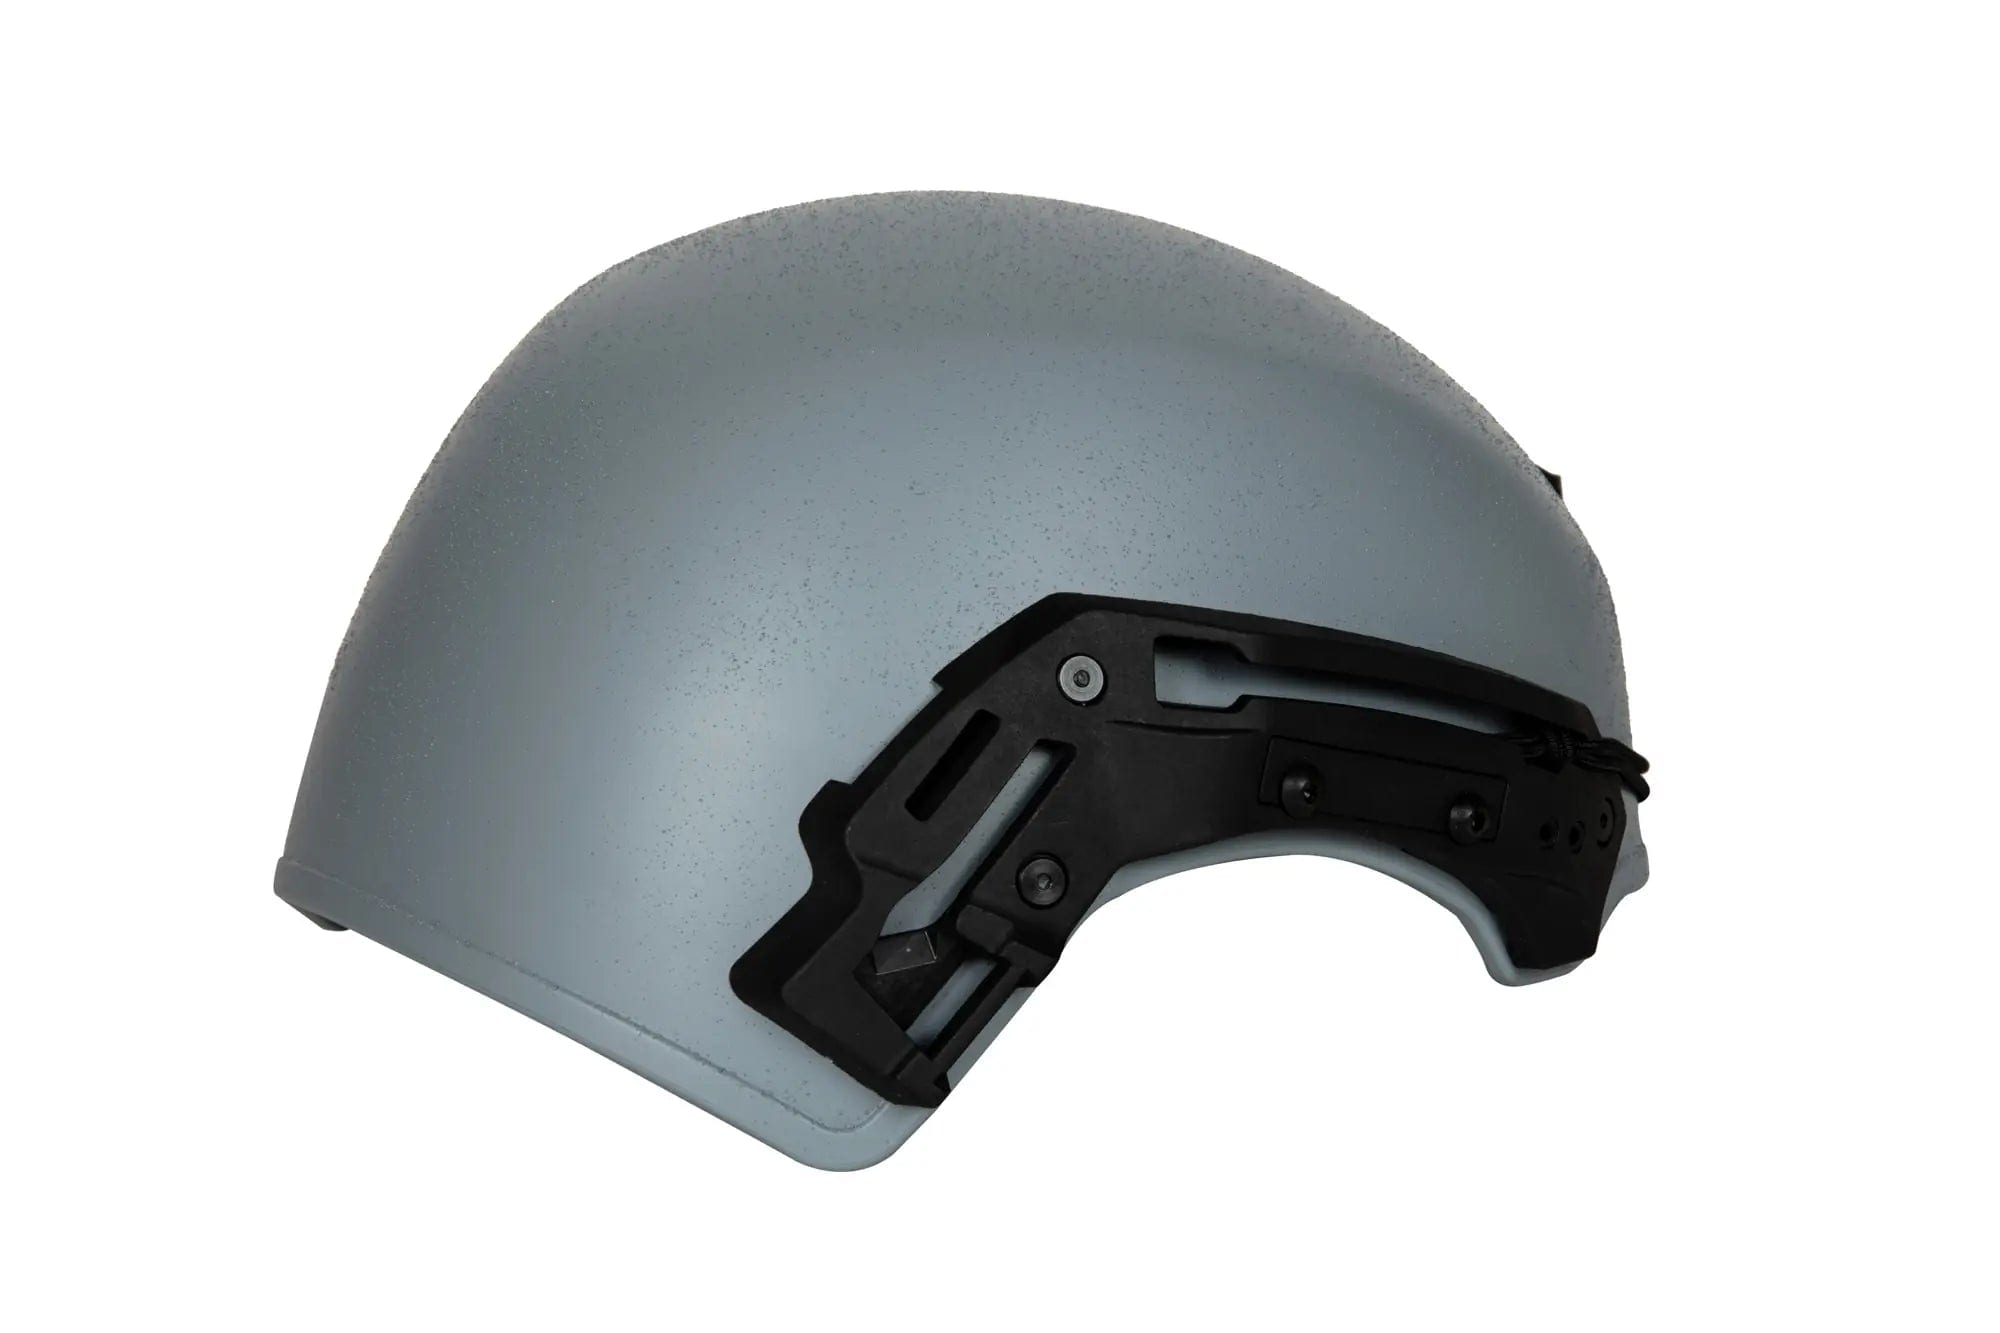 EXFIL helmet (L/XL) - Grey